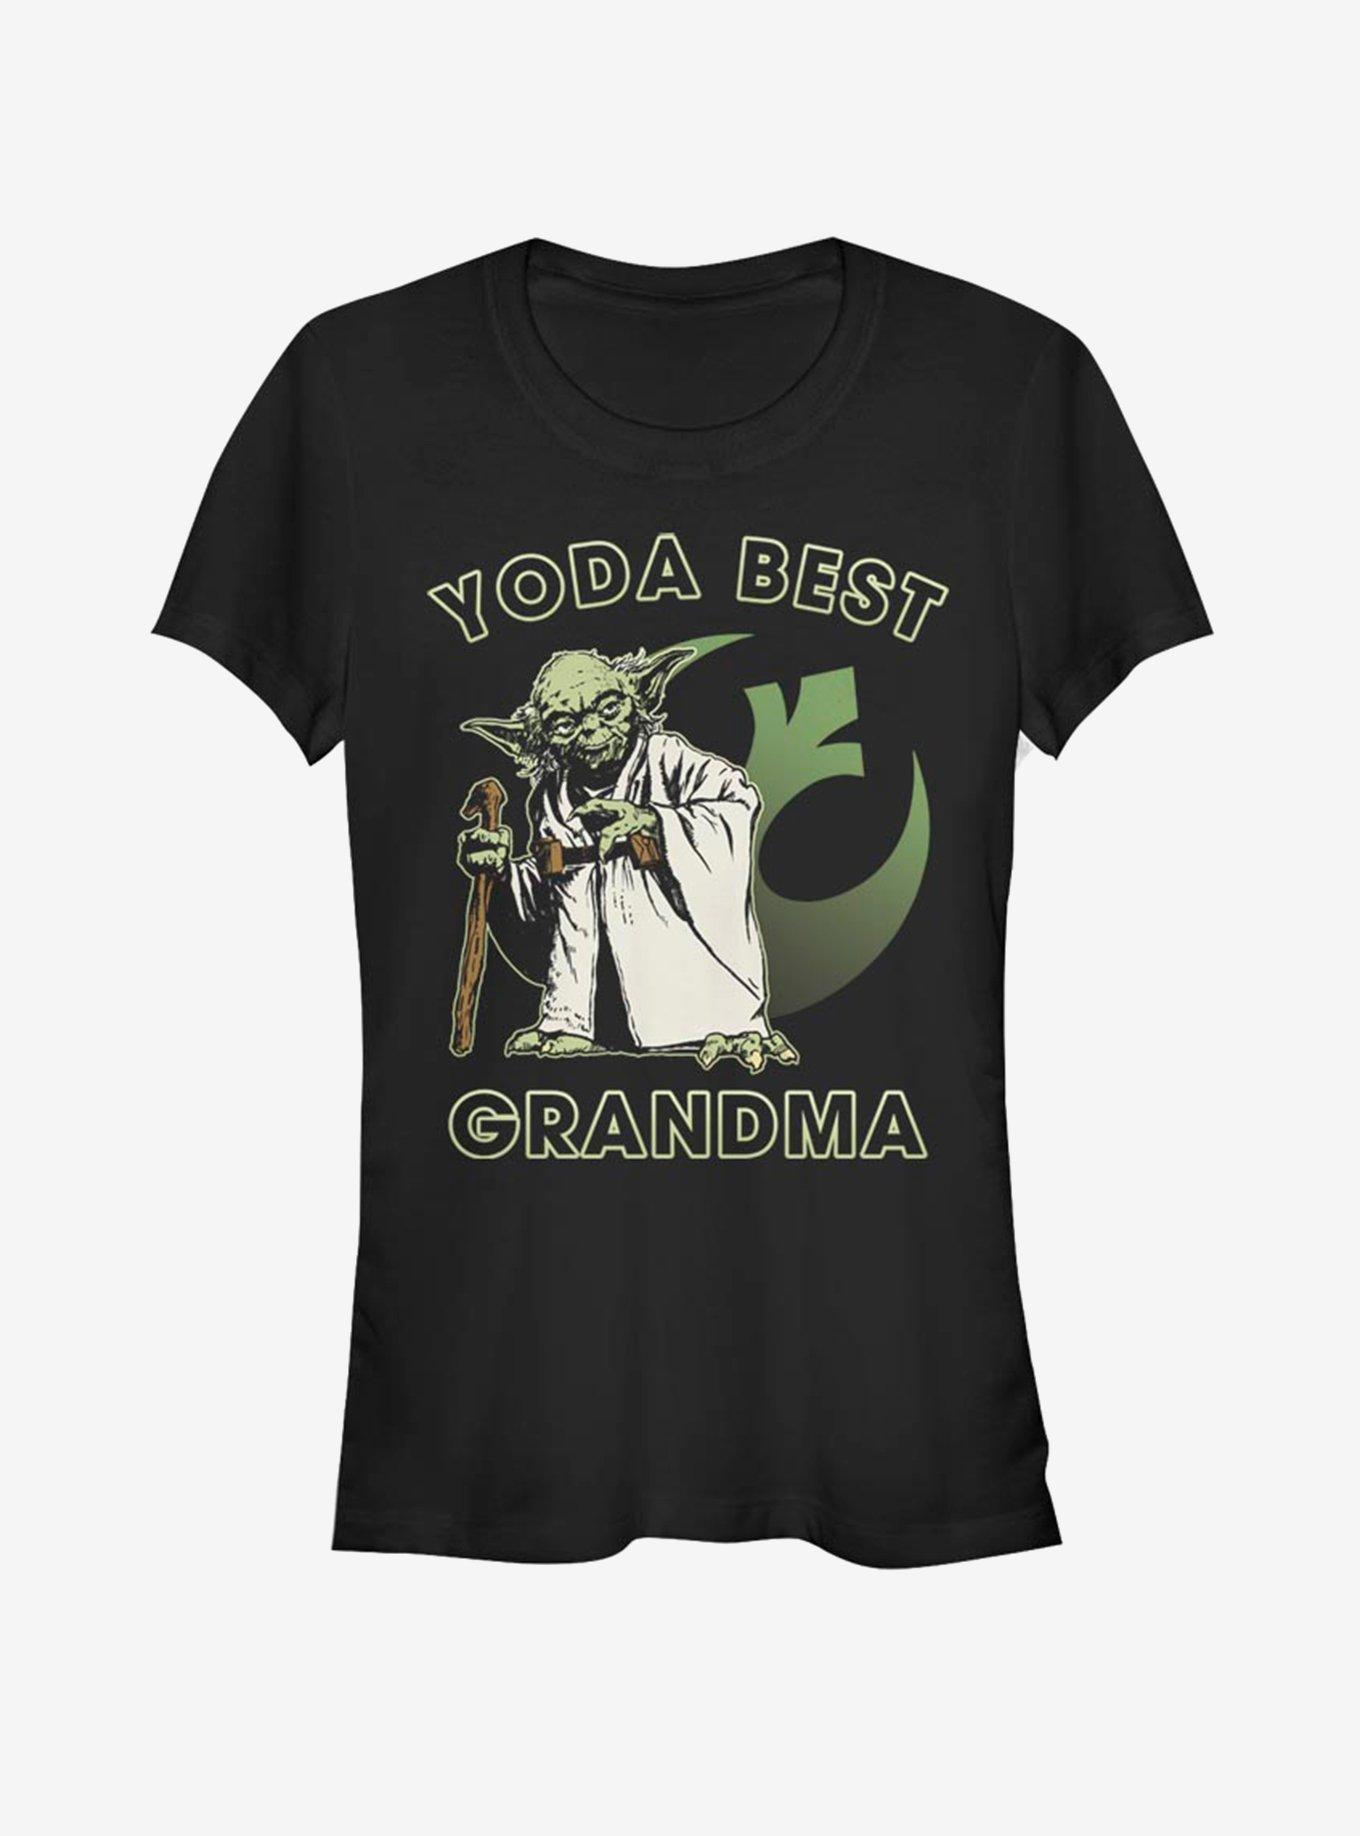 Star Wars Yoda Best Grandma Girls T-Shirt